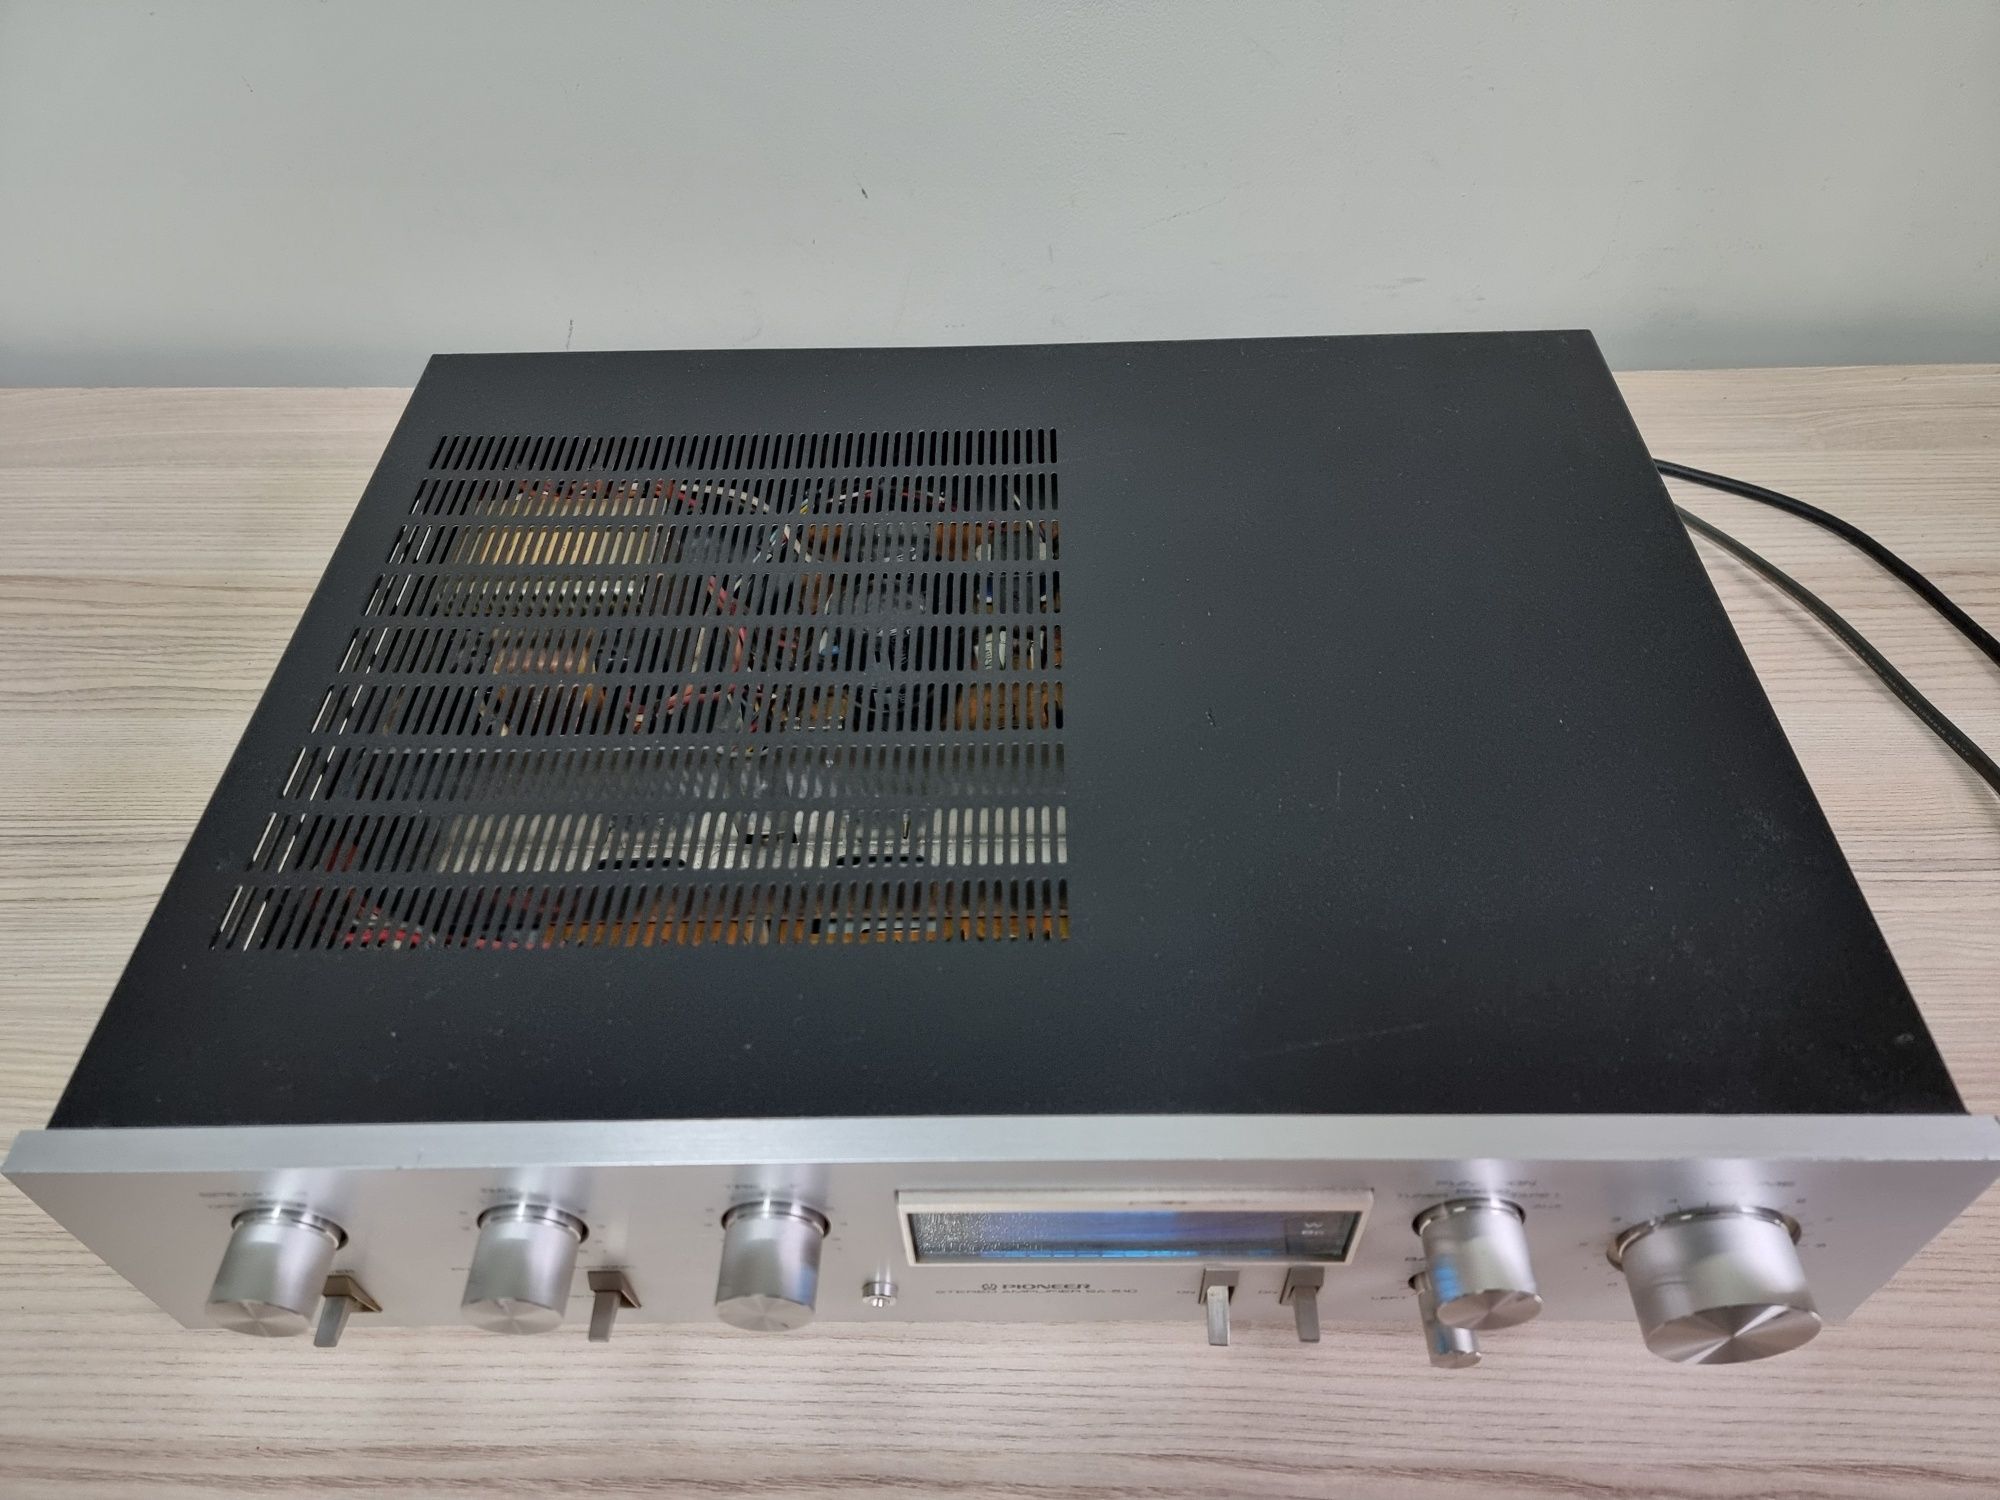 Pioneer SA-510 stereo amplifier